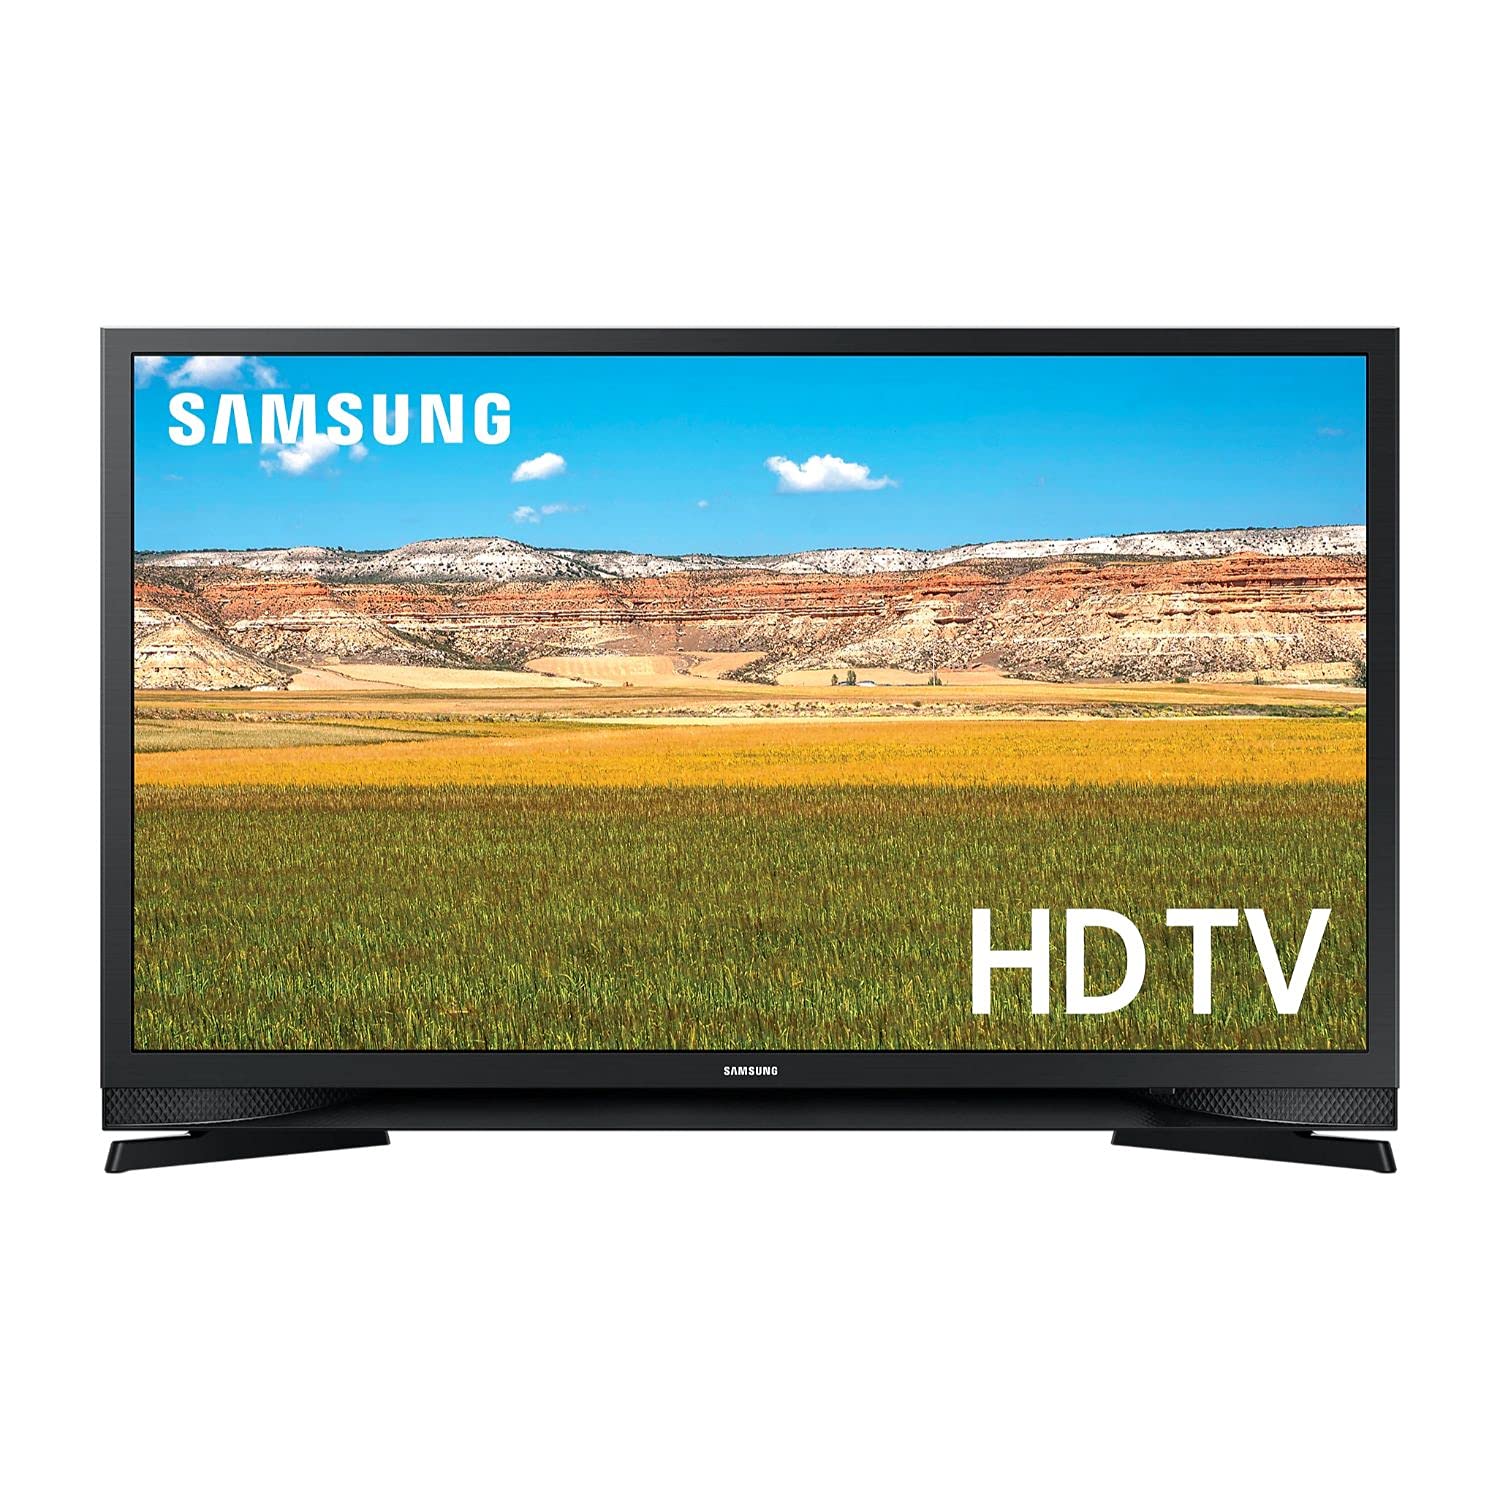 Samsung 80 cm UA32T4600  (32 Inches) HD Ready Smart LED TV (Black)